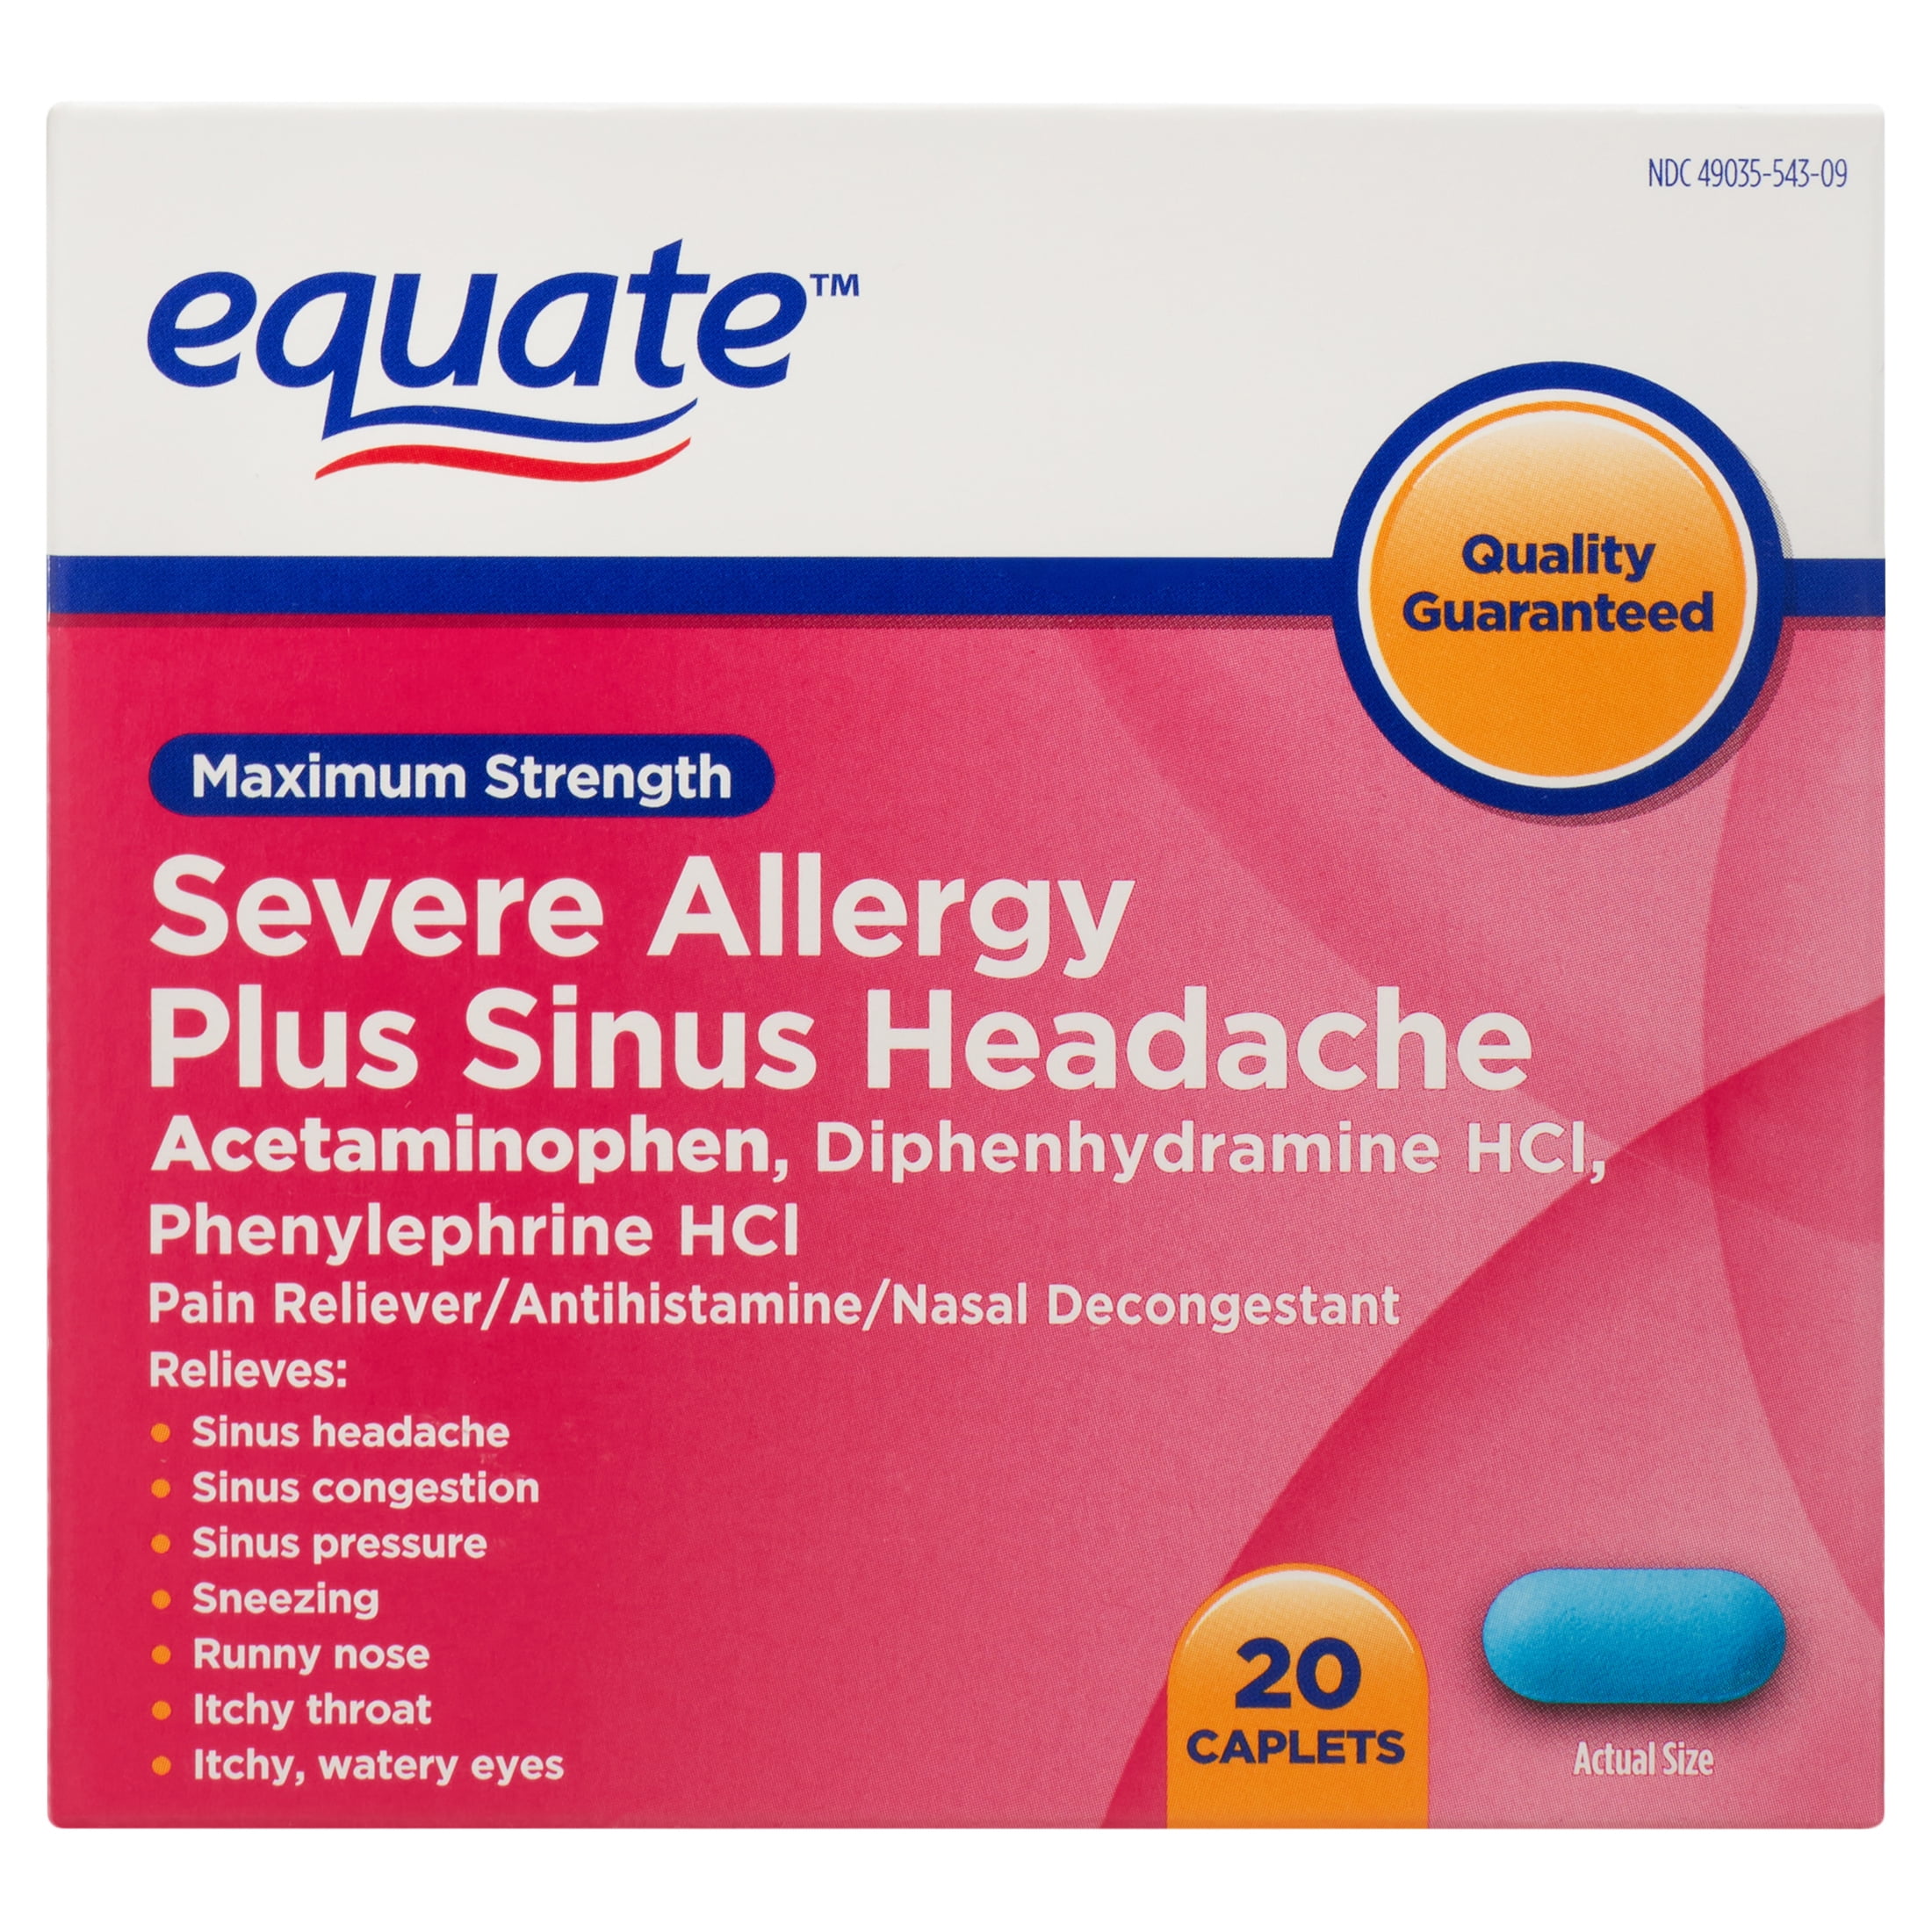 Equate Maximum Strength Severe Allergy Plus Sinus Headache Caplets, 20 Count  - Walmart.com